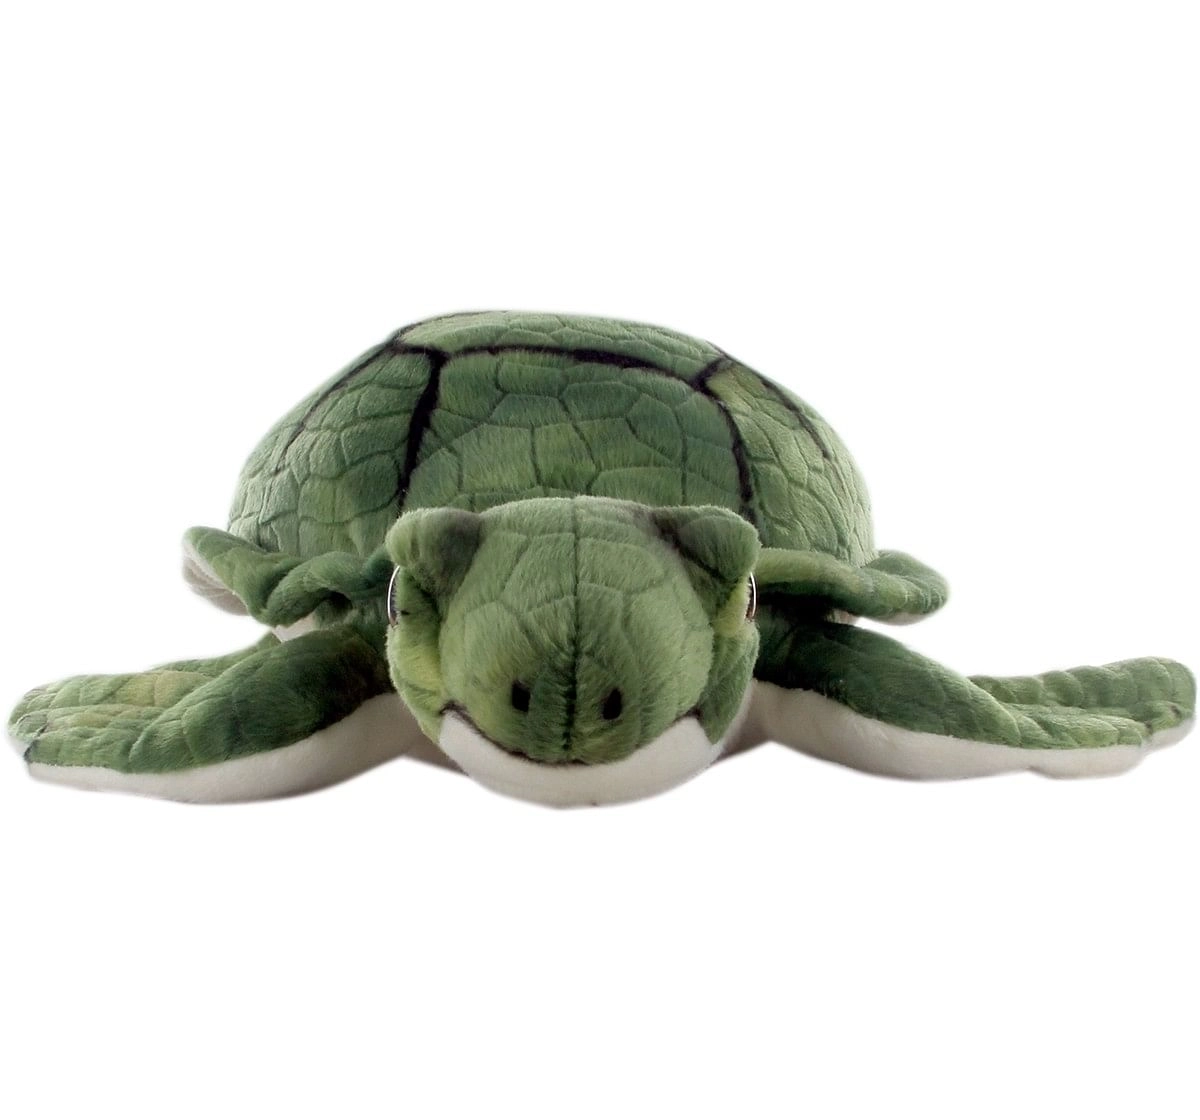  Hamleys Sea Turtle Soft Toy (Green) Animals & Birds for Kids age 0M+ - 10 Cm (Green)